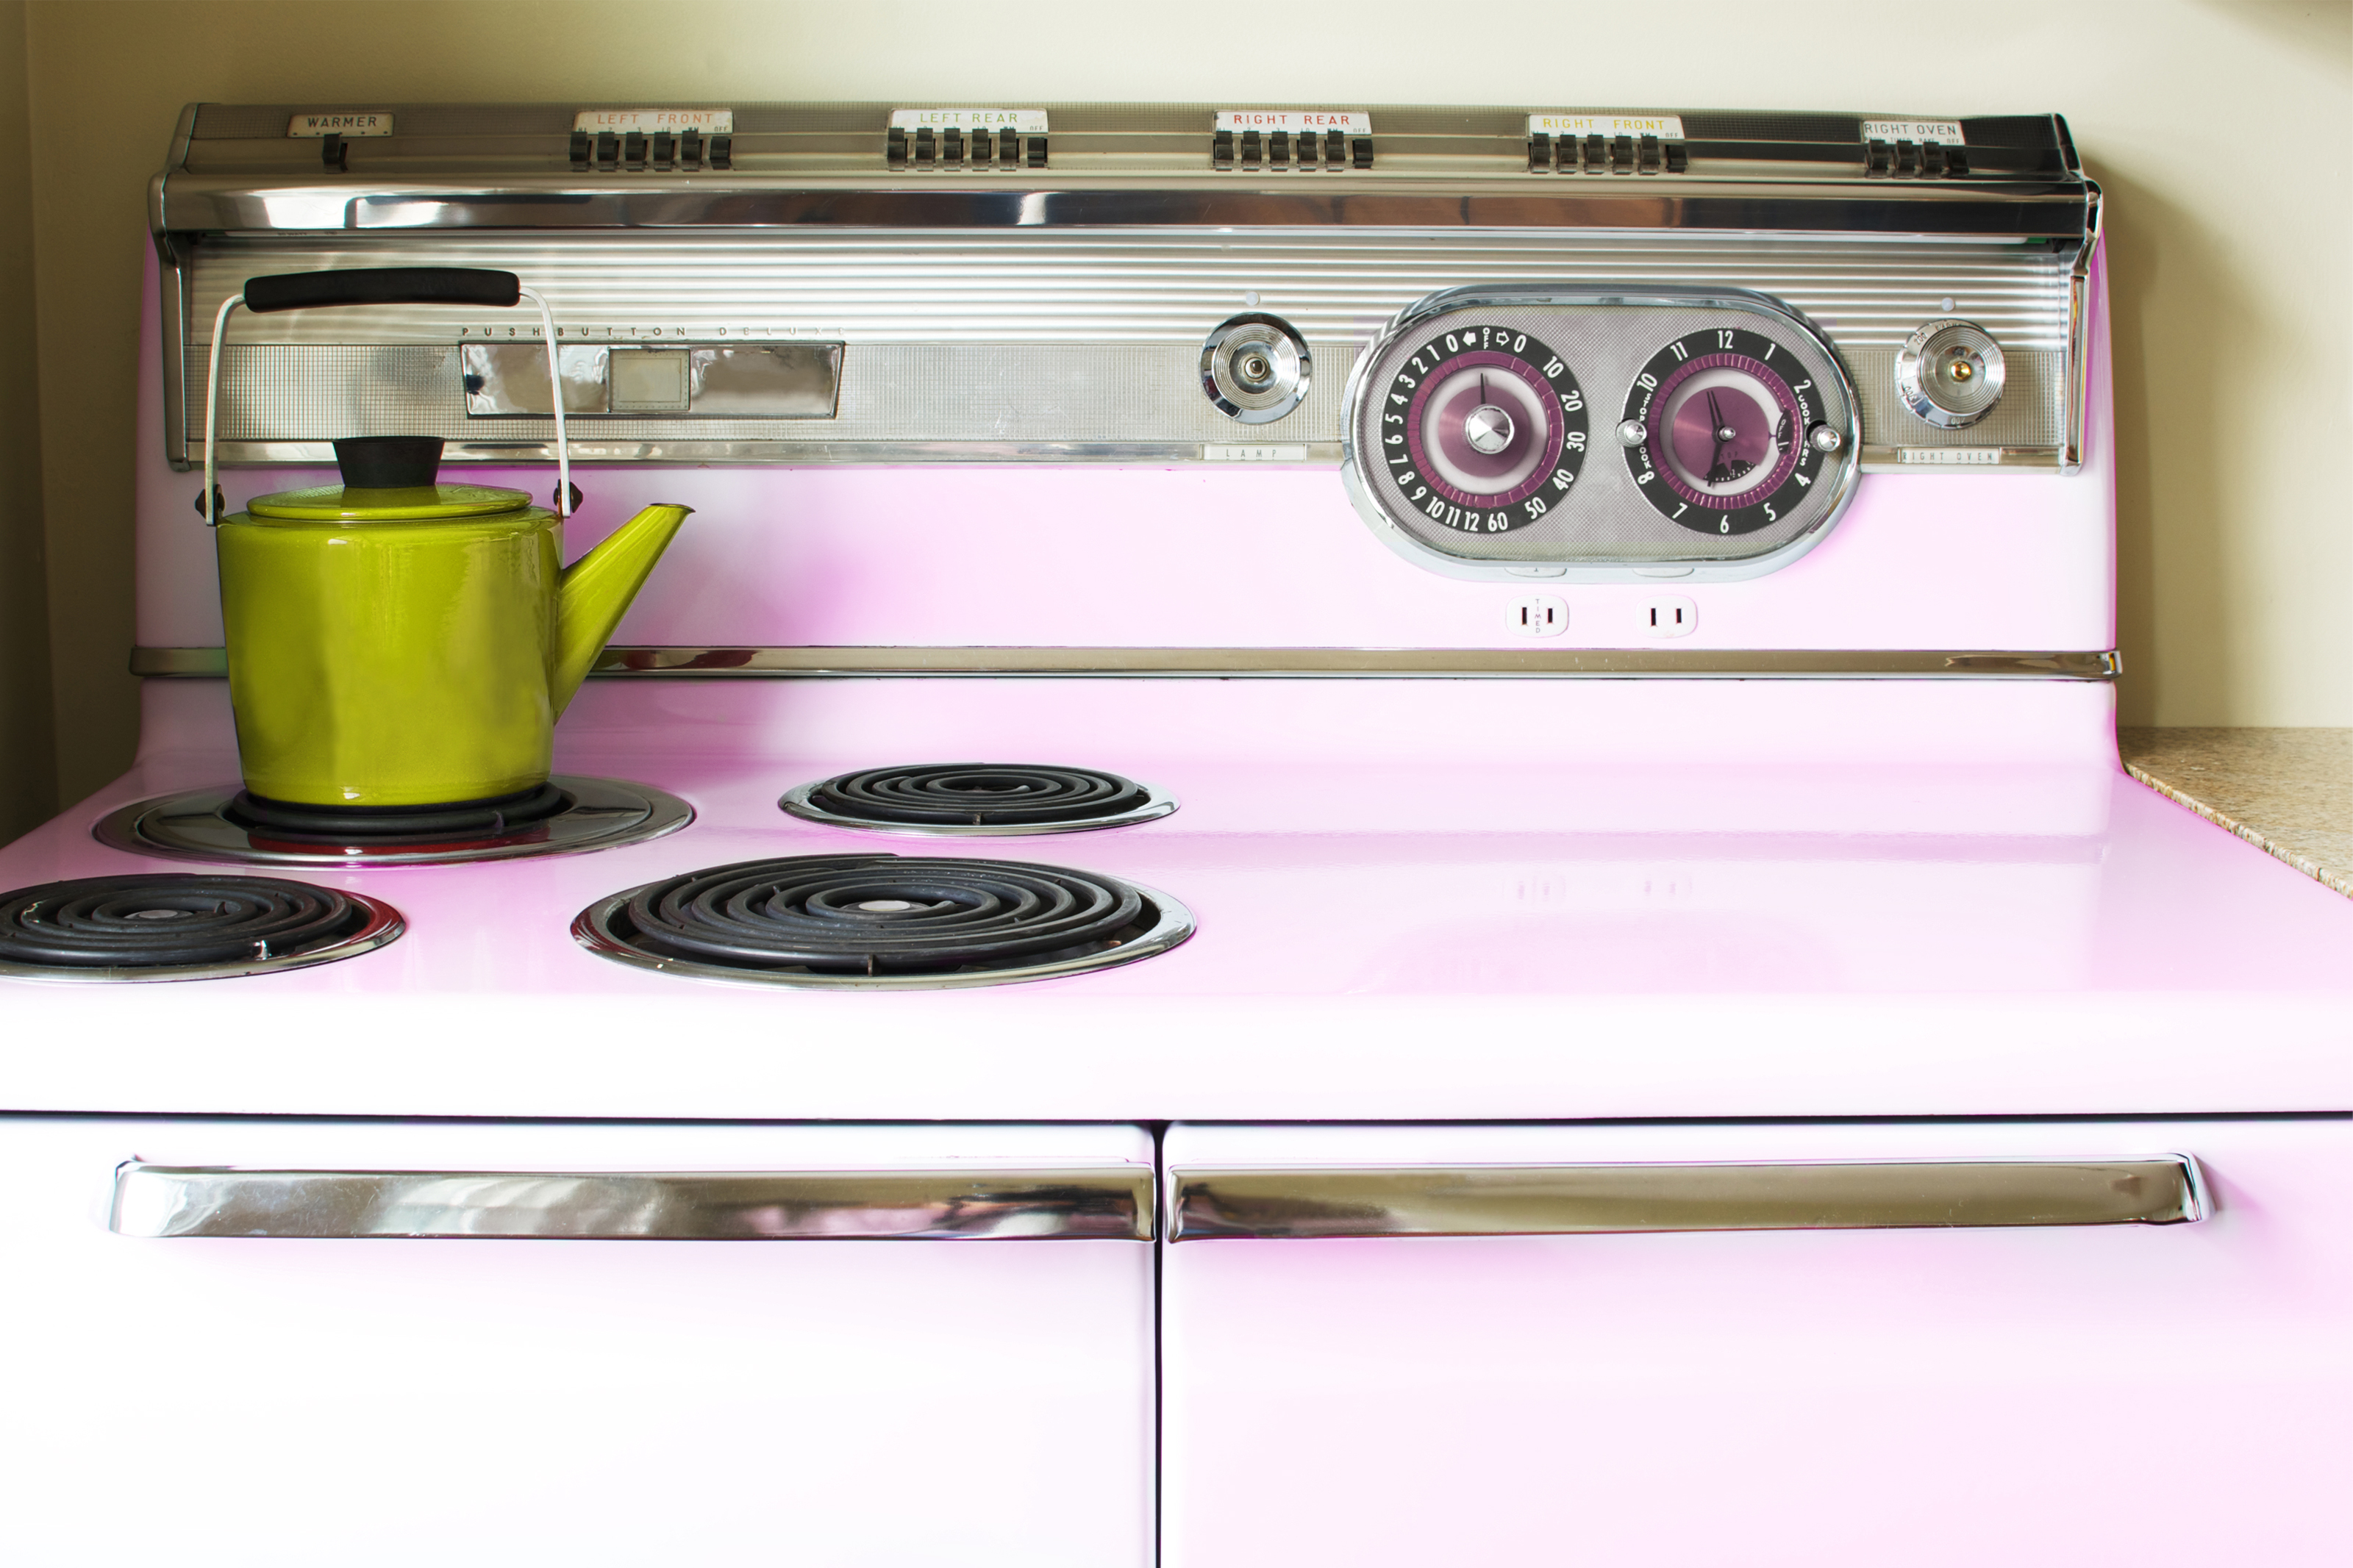 https://www.houselogic.com/wp-content/uploads/2018/08/how-long-appliances-stove-pink-retina_retina_f51da3a795ae076980947fbec876fb31.jpg